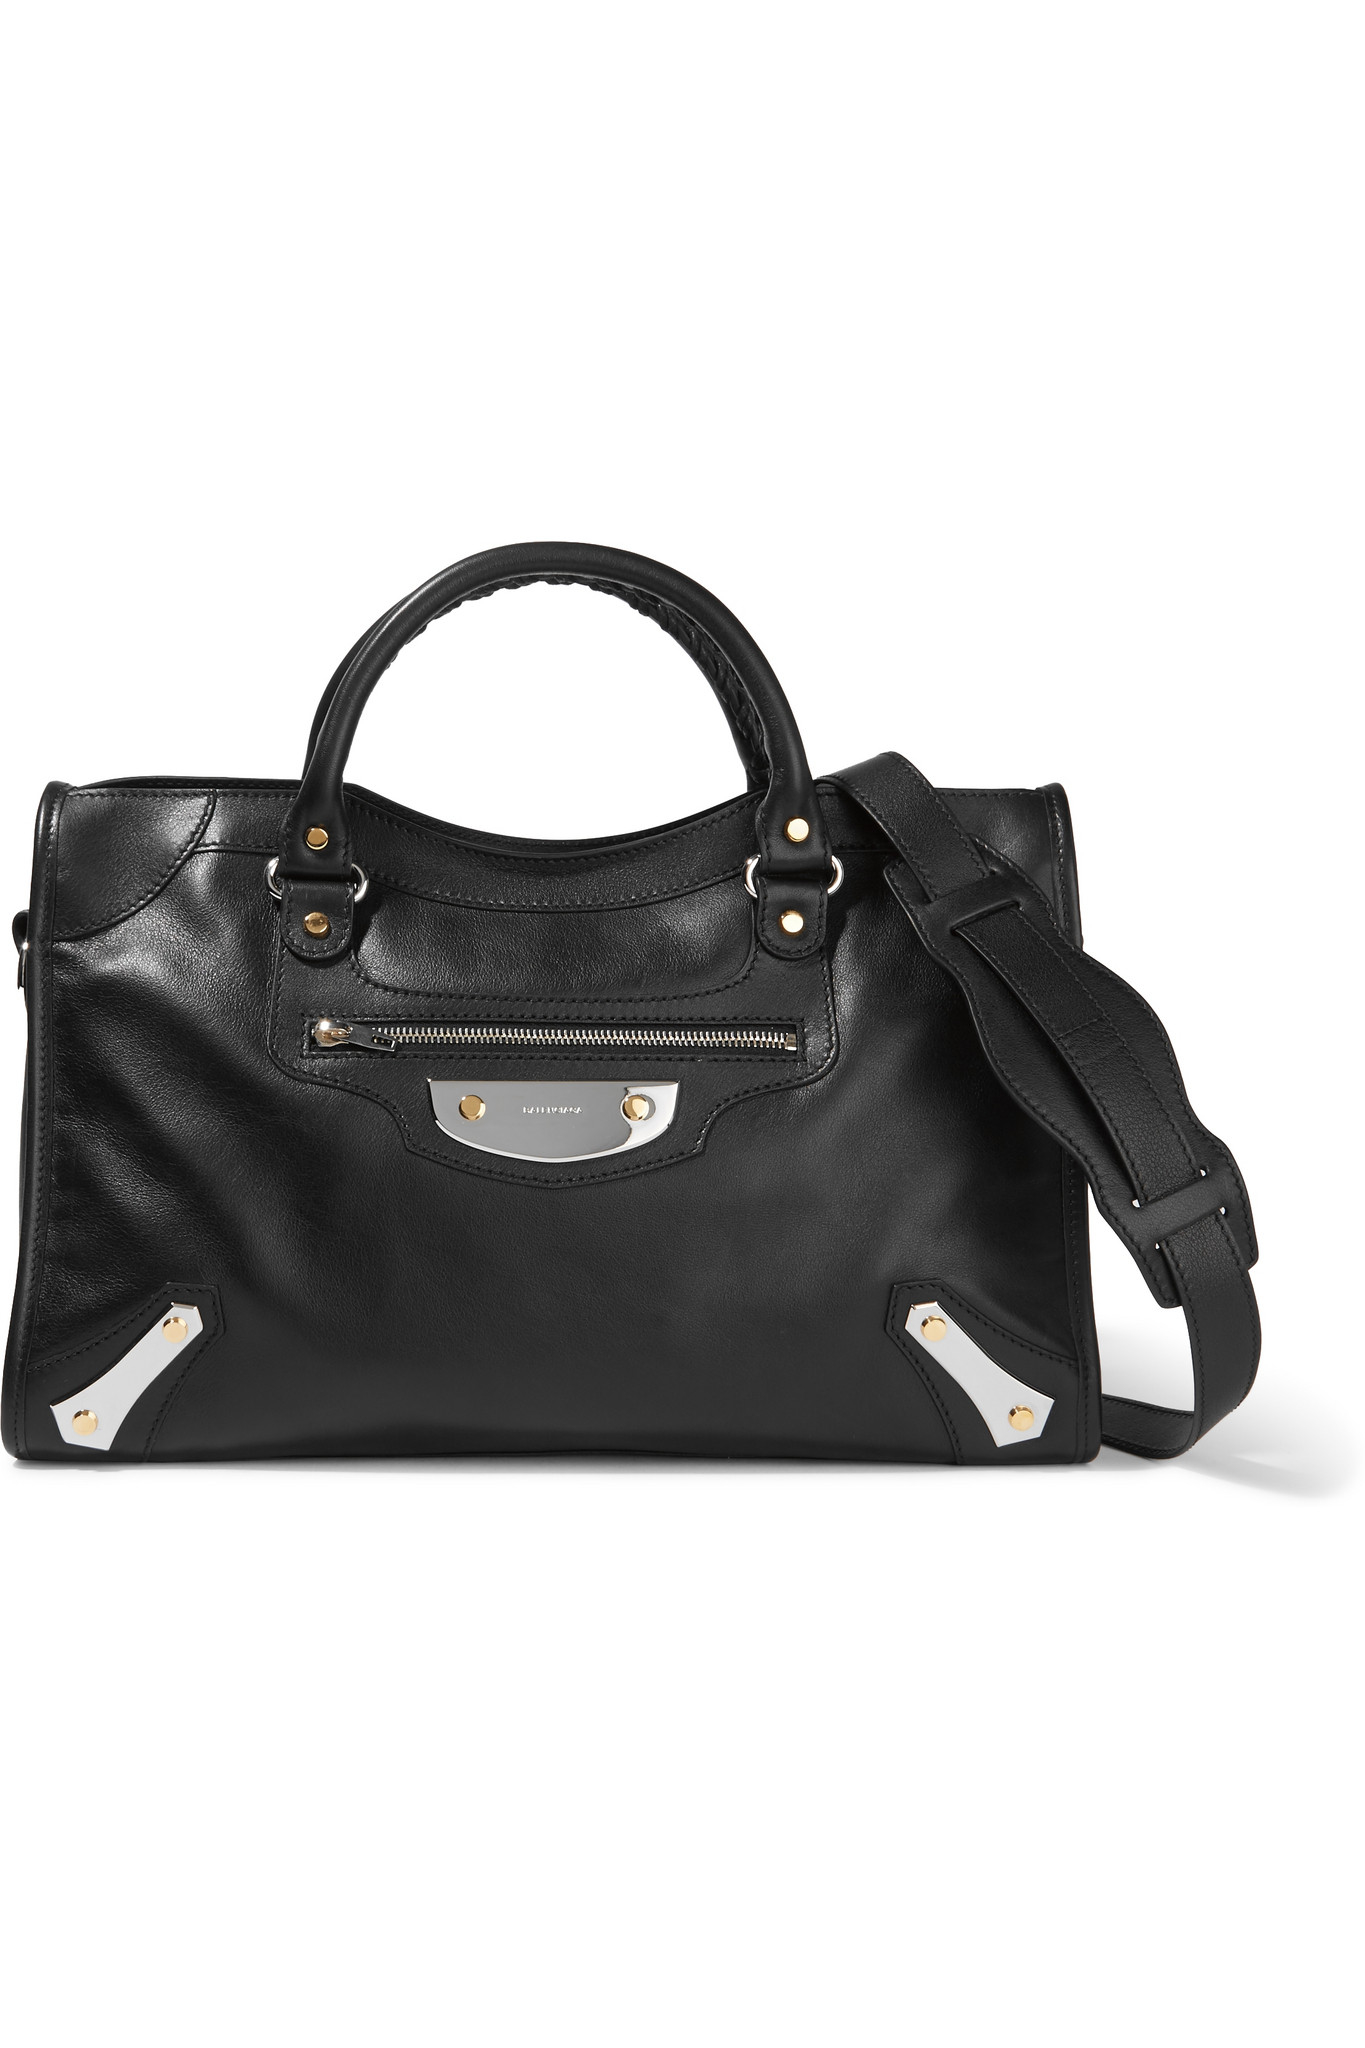 Balenciaga Metal Plate City Leather Shoulder Bag in Black - Lyst